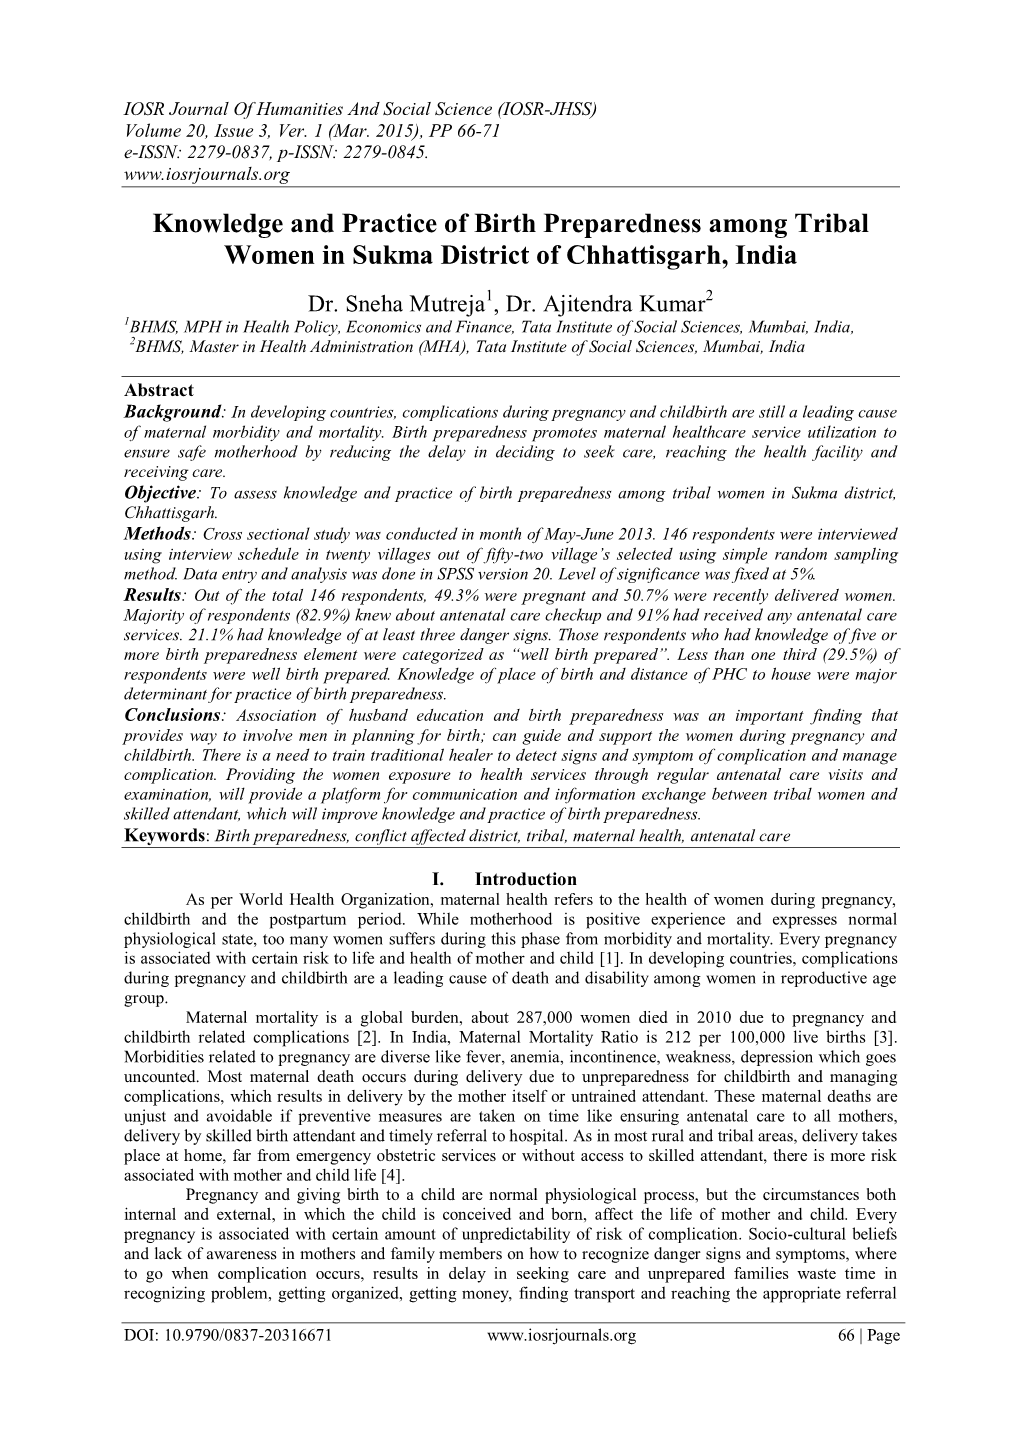 Knowledge and Practice of Birth Preparedness Among Tribal Women in Sukma District of Chhattisgarh, India